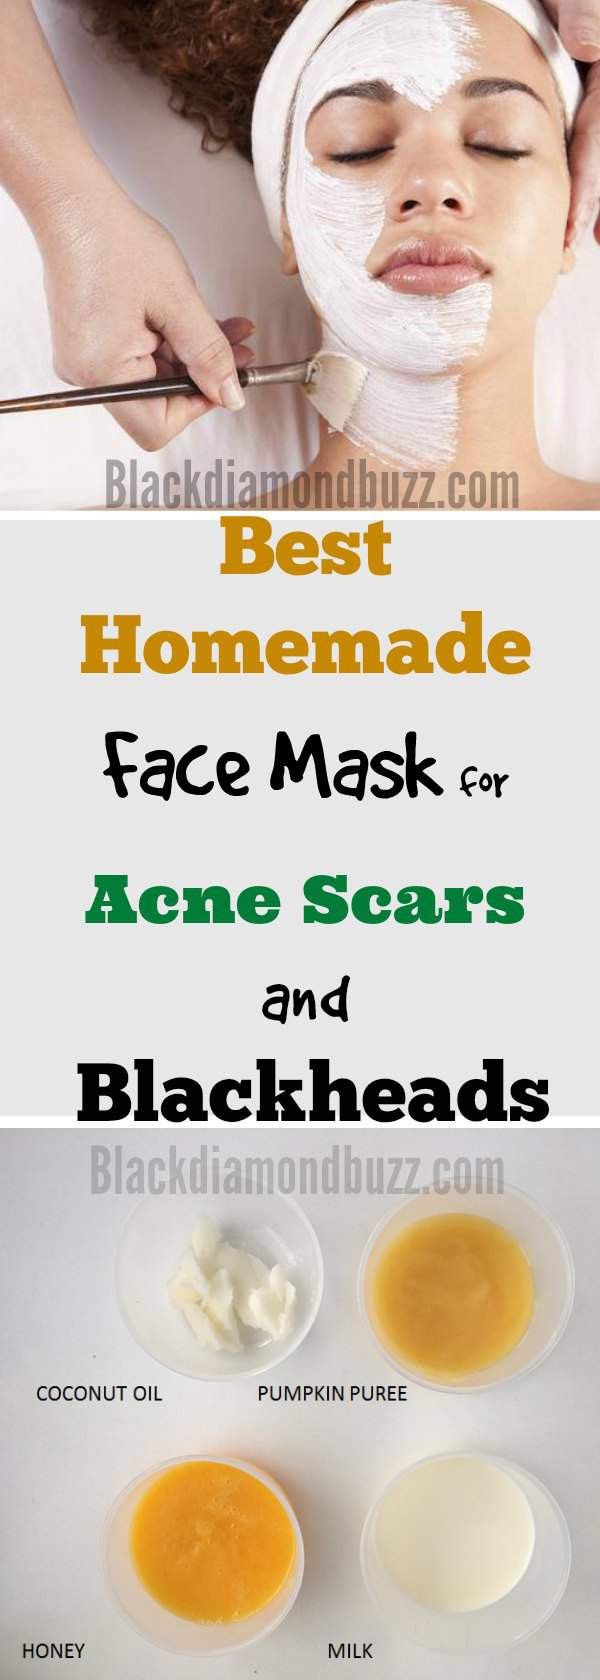 Easy DIY Face Mask For Acne
 DIY Face Mask for Acne 7 Best Homemade Face Masks